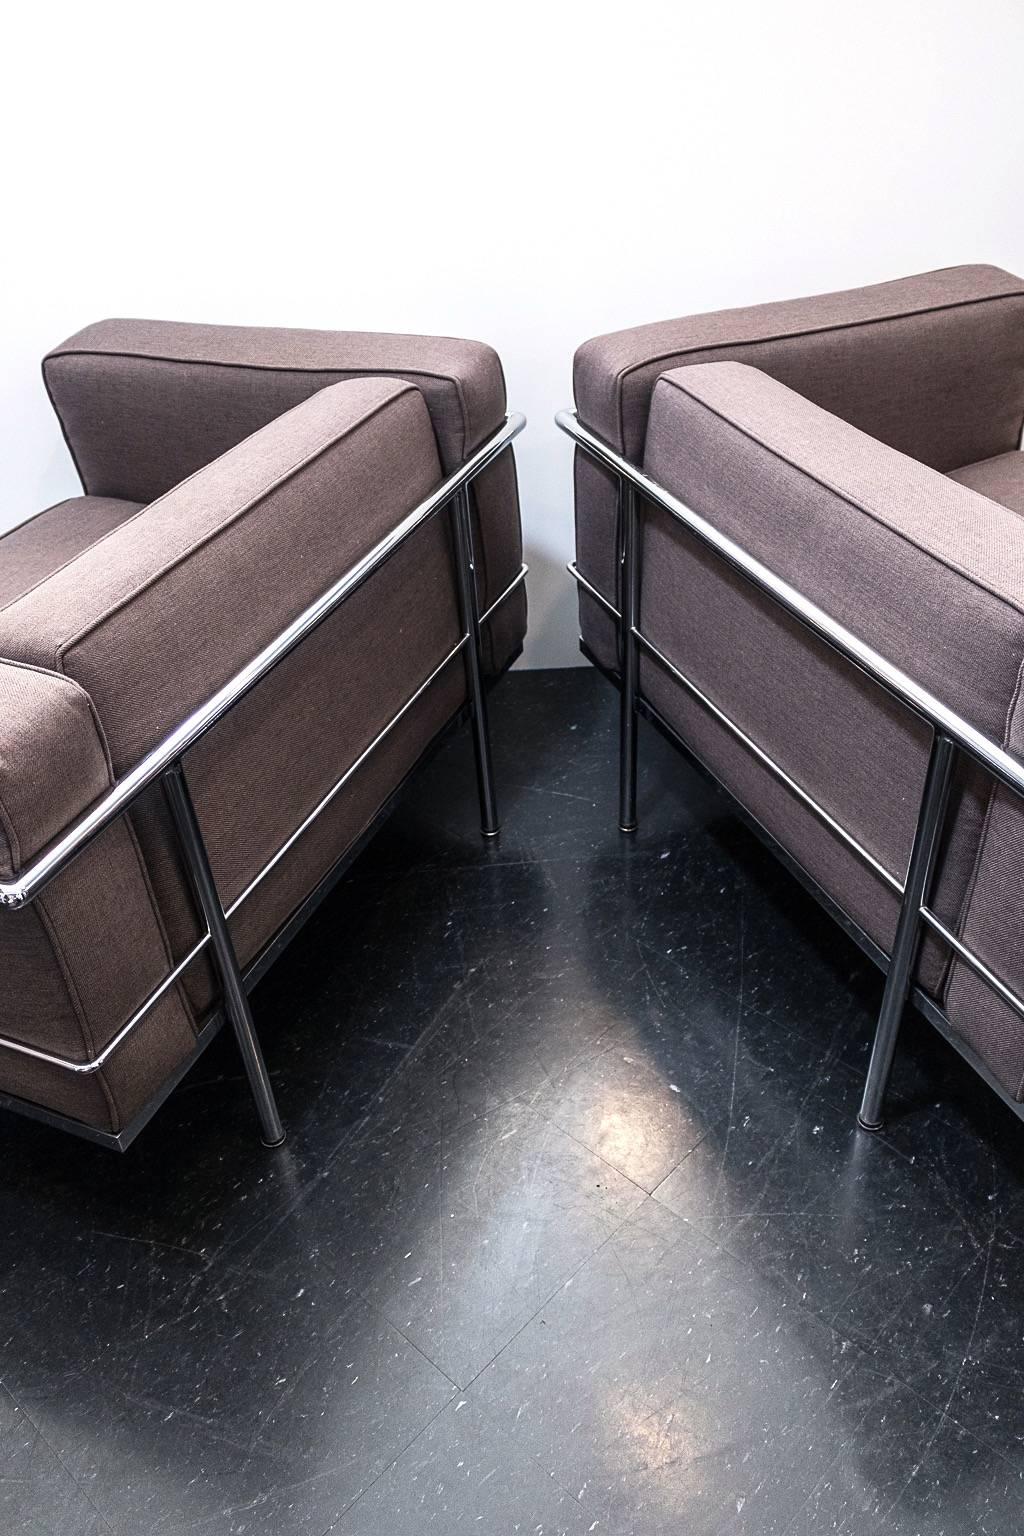 Bauhaus Le Corbusier Style LC3 Chairs